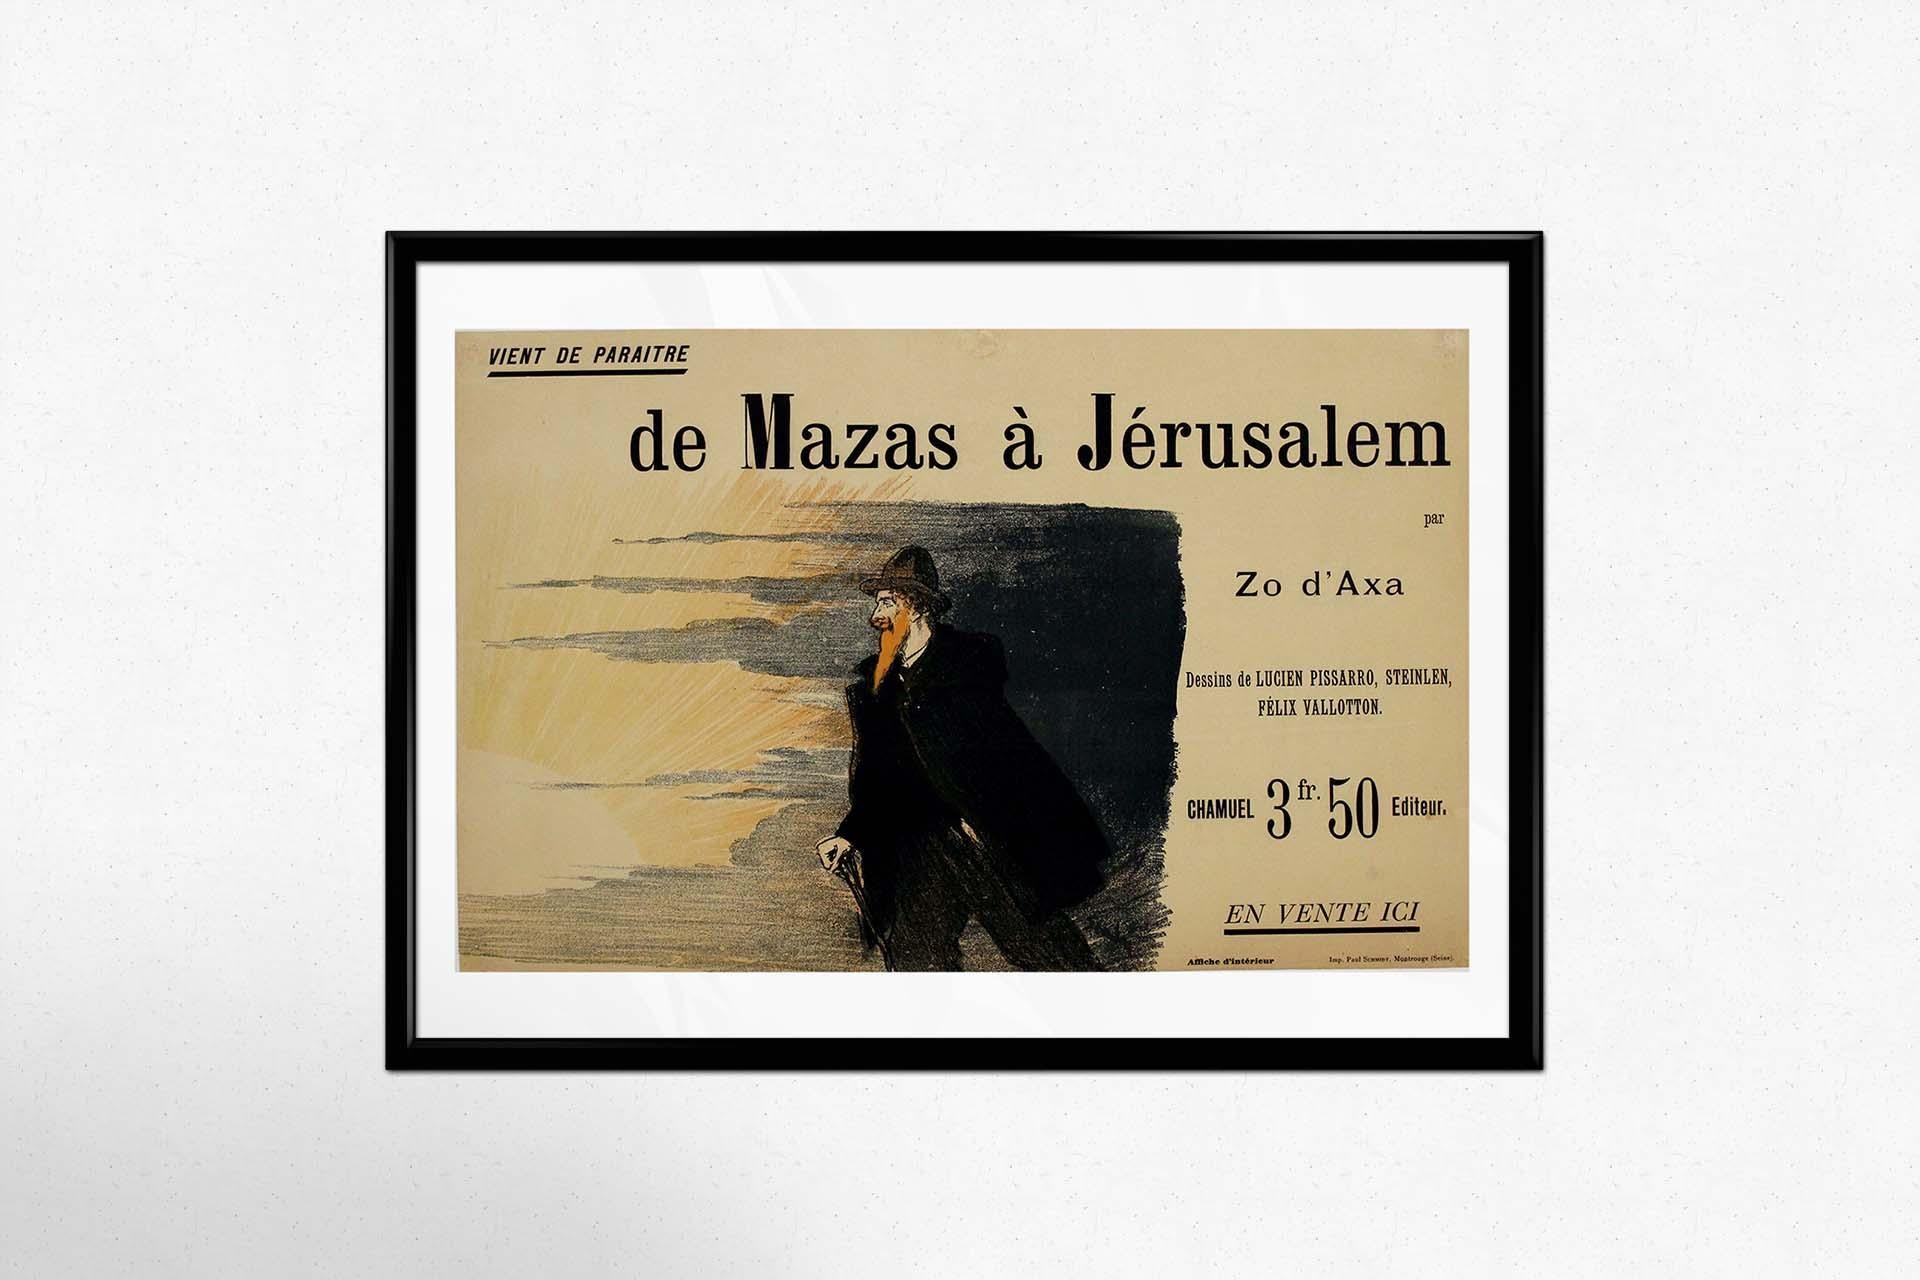 Original 1895 poster by Steinlen - De Mazas à Jérusalem par Zo d'Axa - Art Nouveau Print by Théophile Alexandre Steinlen